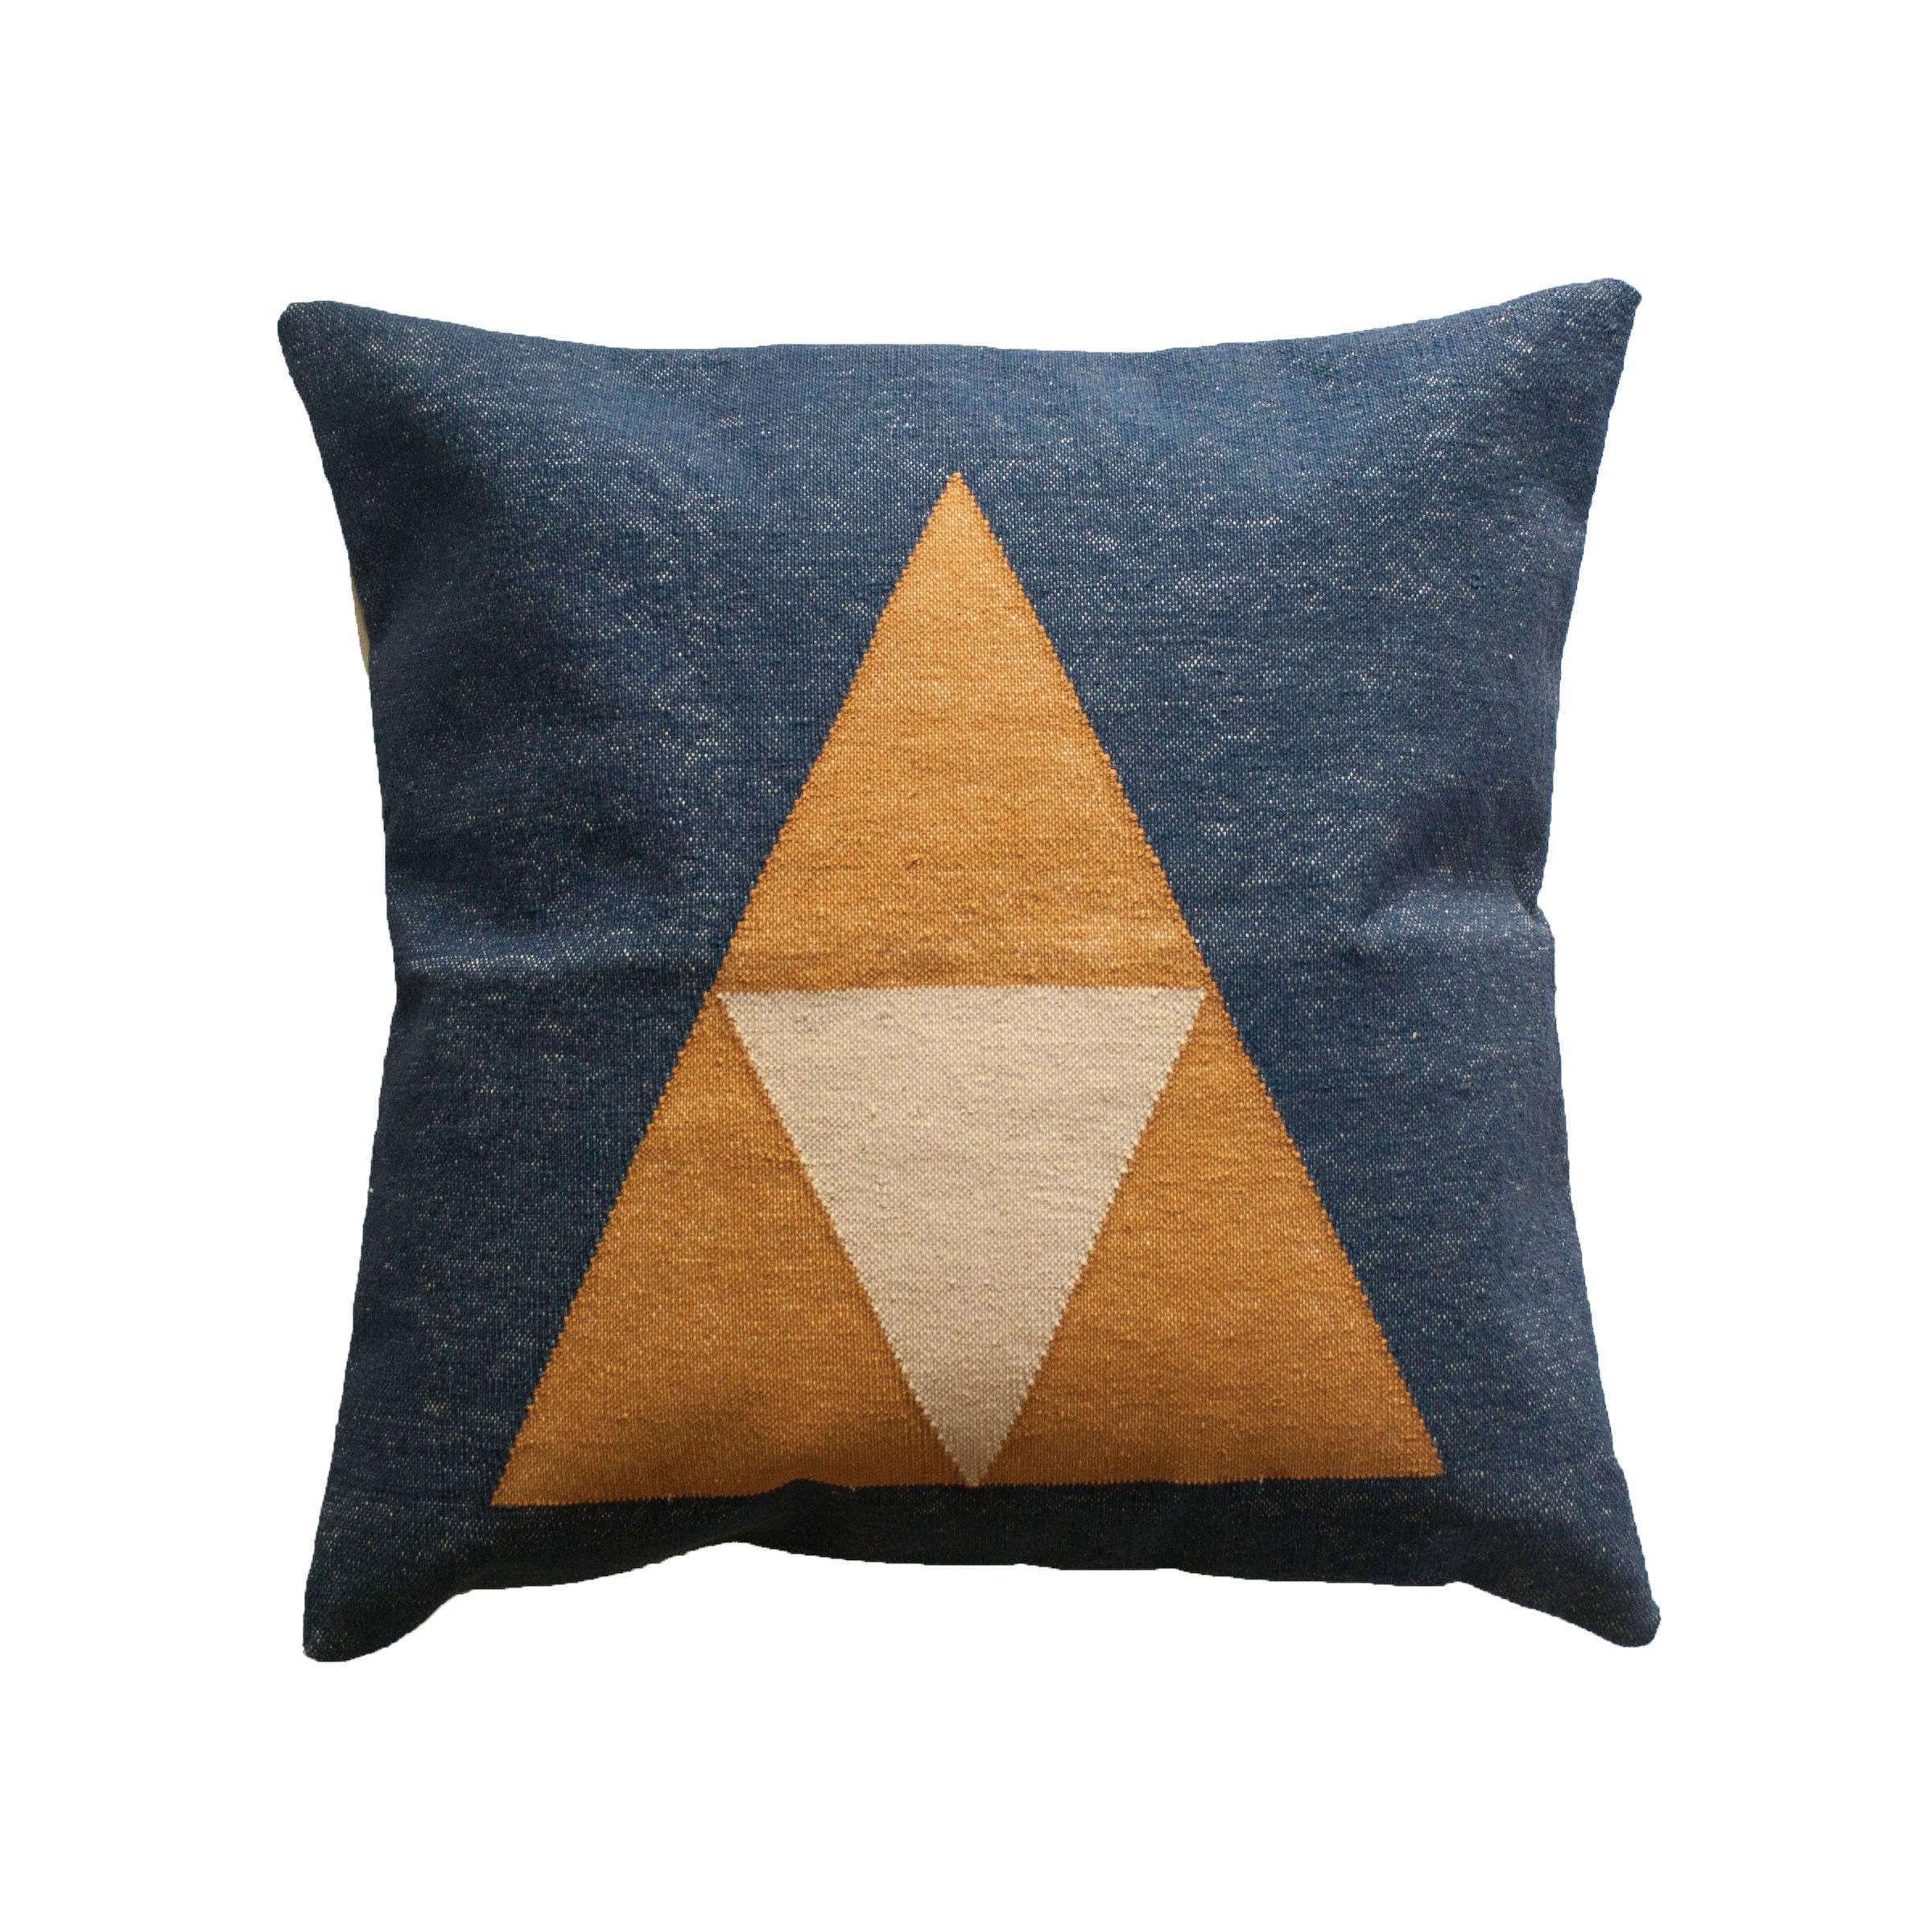 Geometric Maya Up Modern Throw Pillow Cover